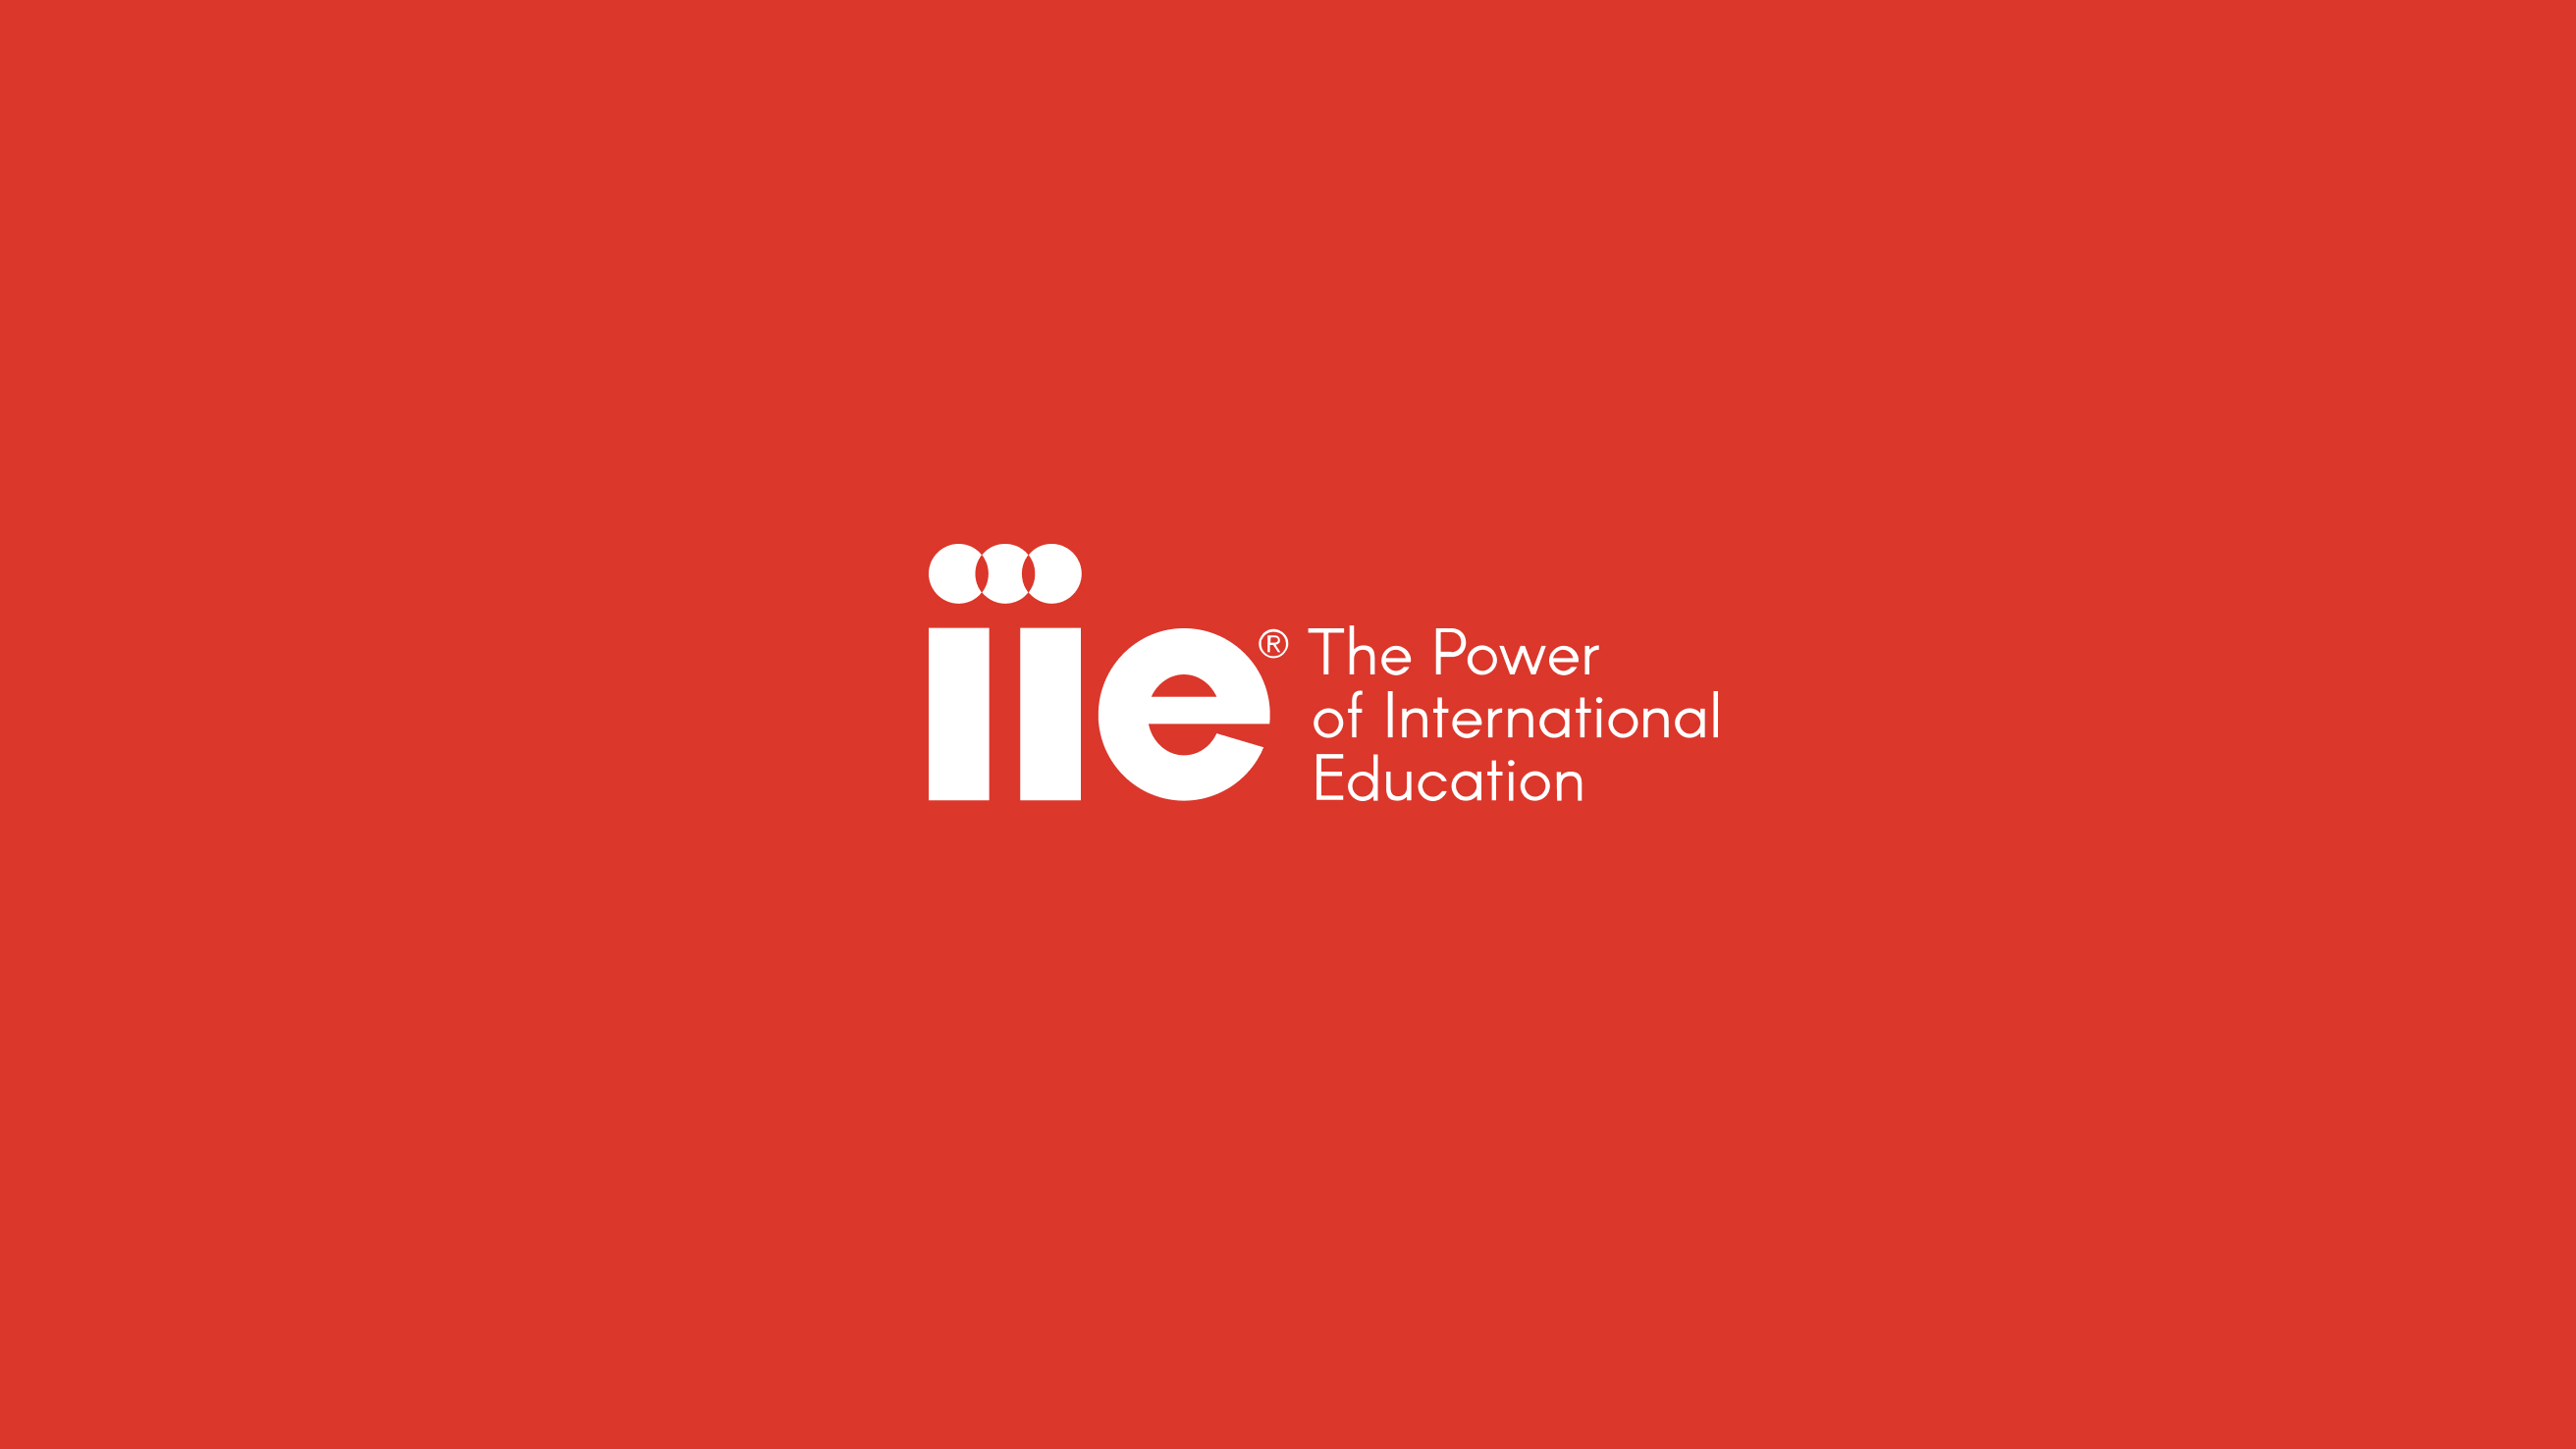 Institute of International Education logo